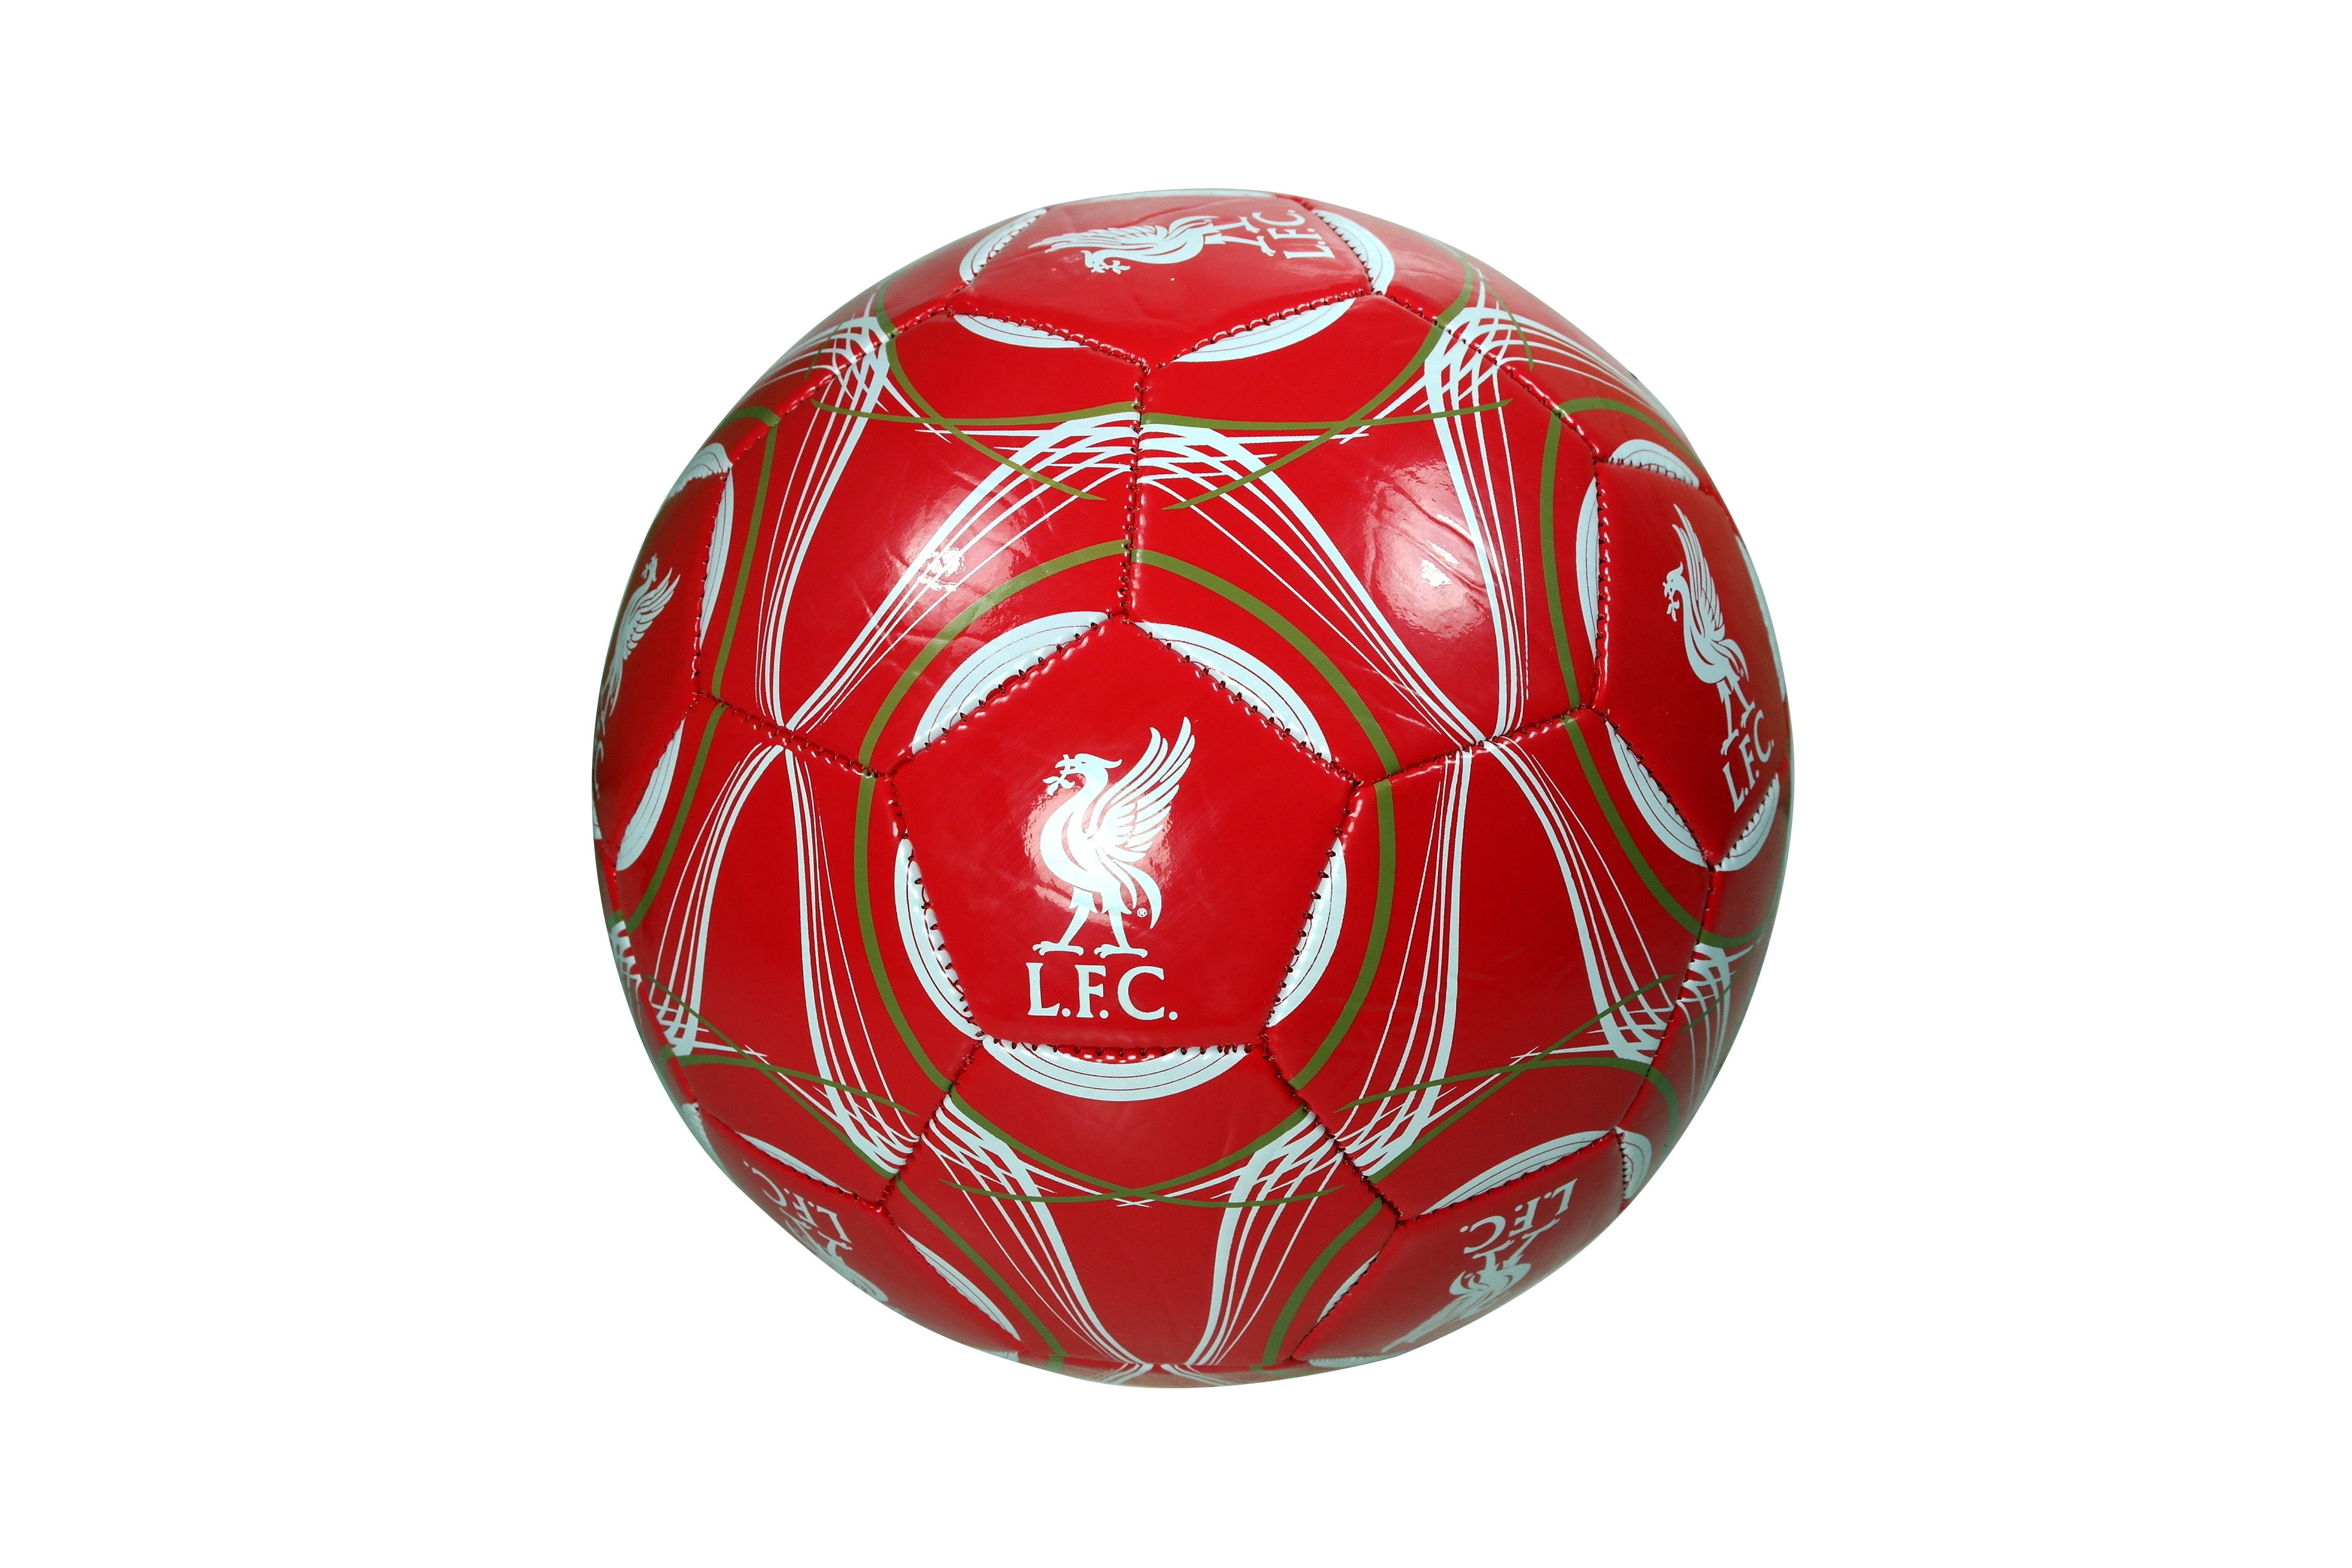 LFC Warrior Football Ballons Ballons loisir Soccer Ball Liverpool Football Club LFC Ball White/Red/Orange Size 5 Brand New LFFL122-WRA 